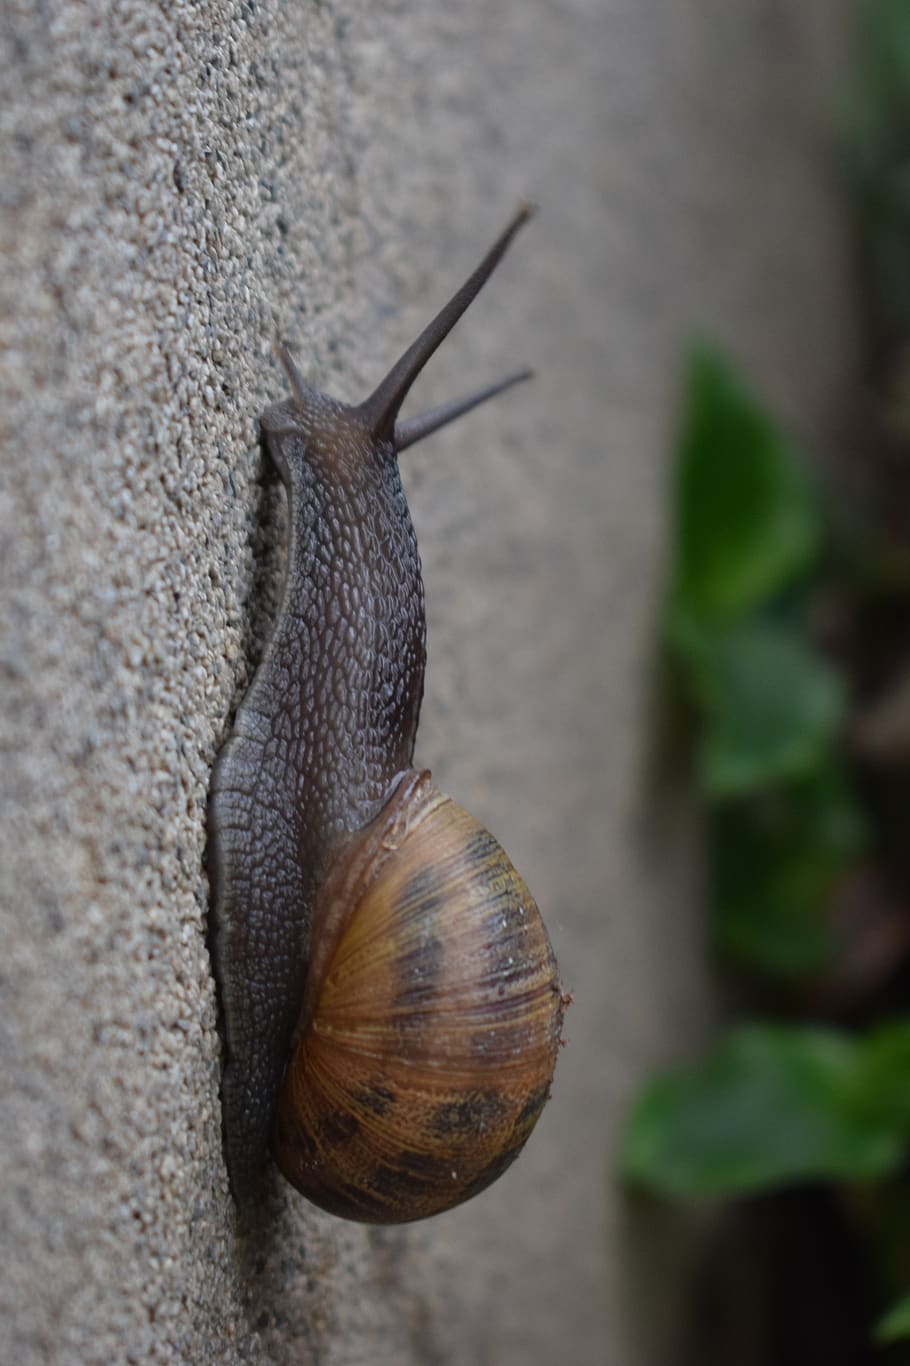 snail, gastropod, slow, clam, invertebrate, exoskeleton, slimy, nature, garden, wall